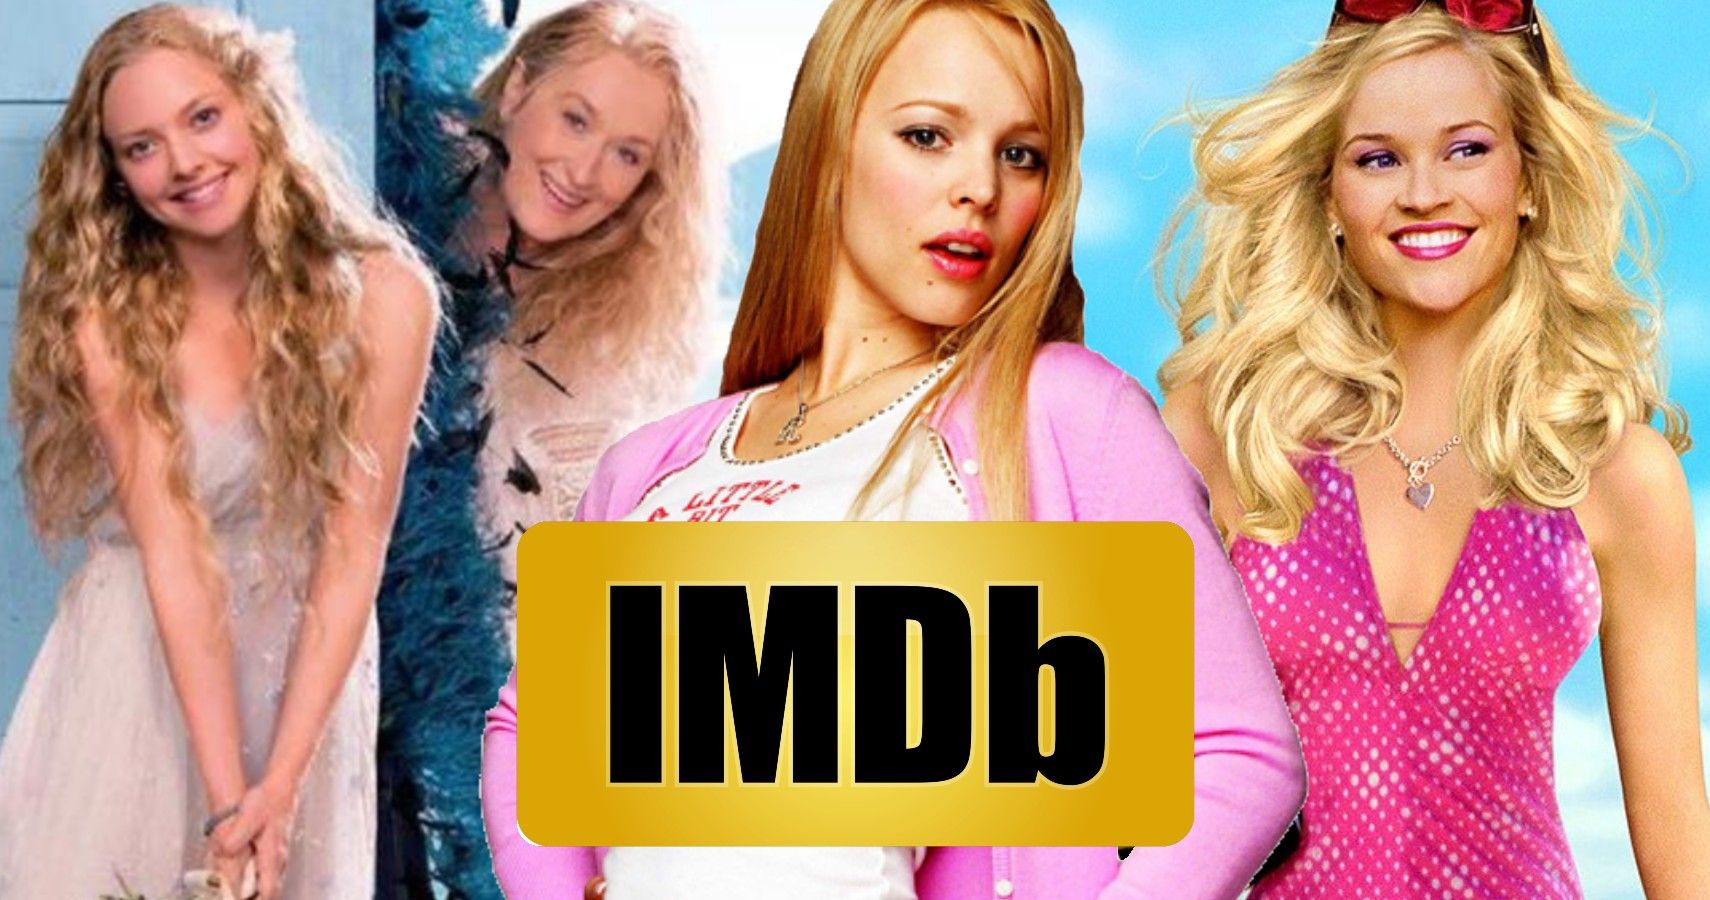 Mamma Mia! (2008) - IMDb